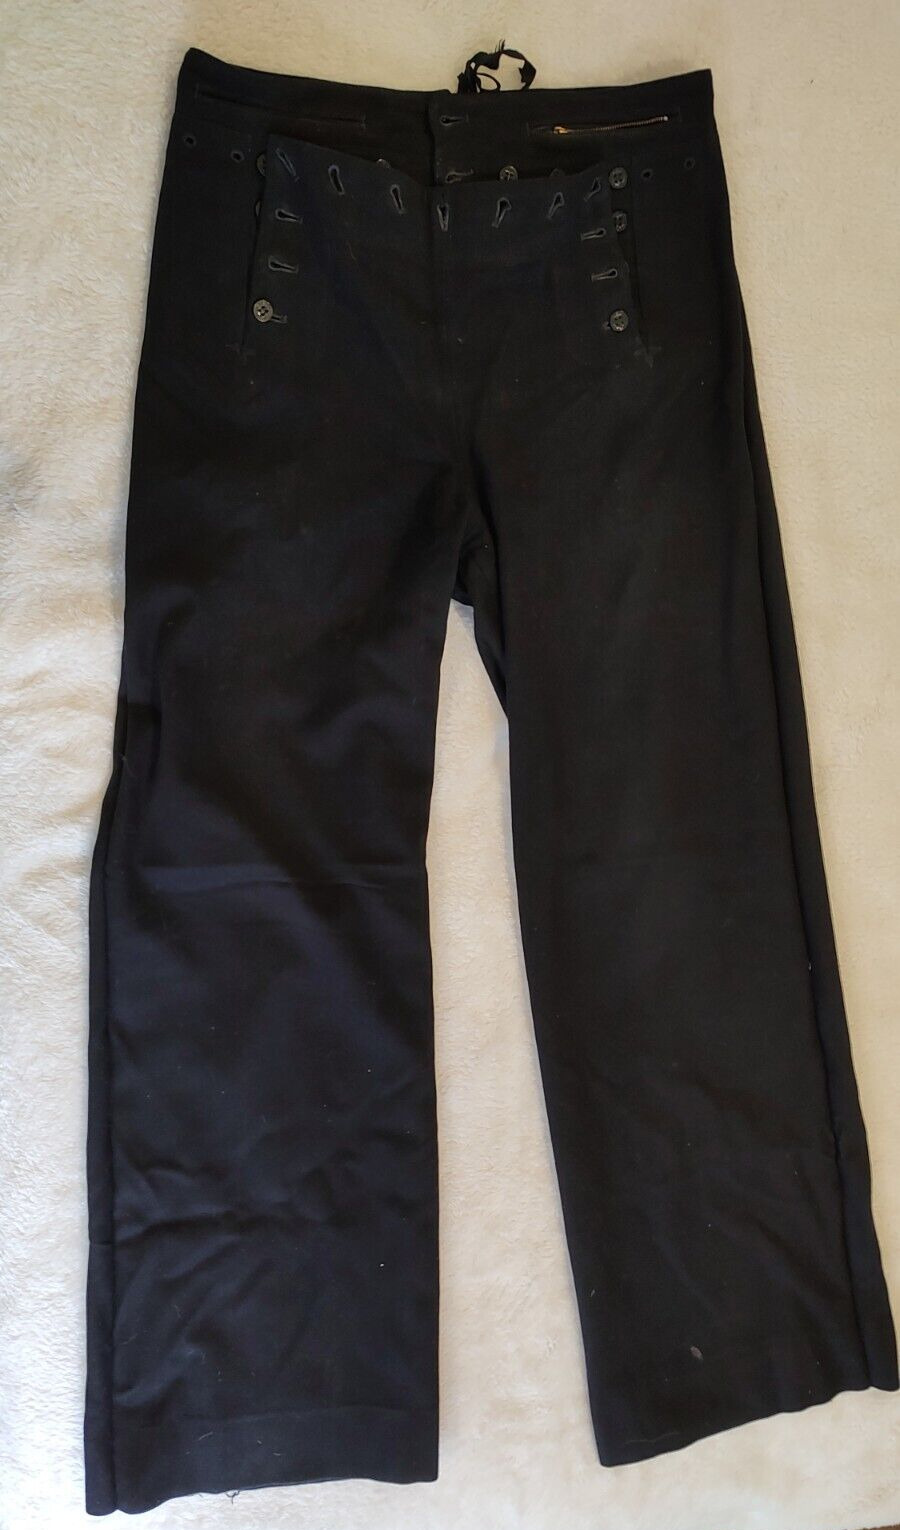 Vintage WW2 Era US Navy Pants Wool Buttons Cracker Jack Flare W33”xL32” Black